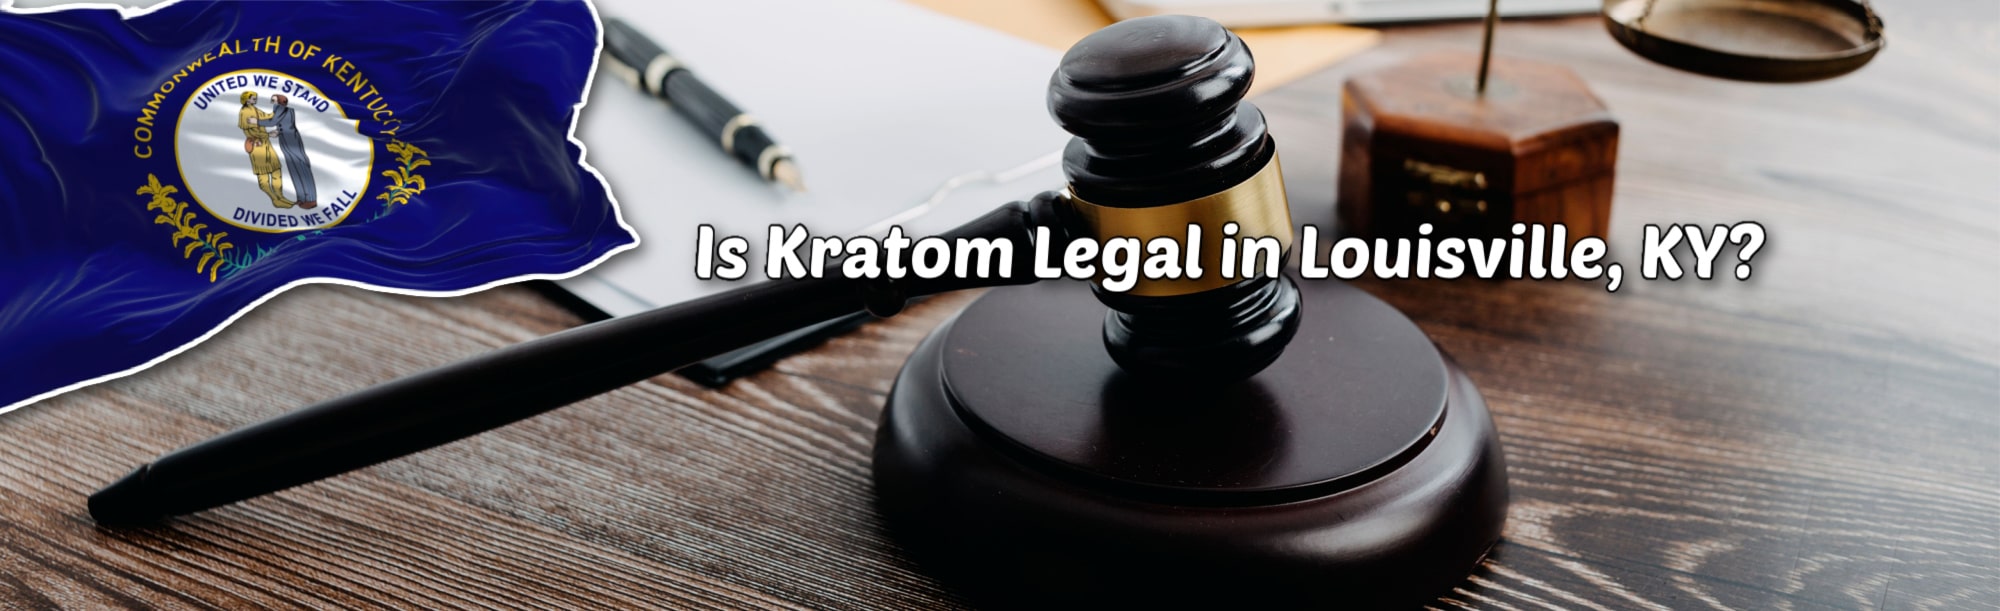 image of is kratom legal in louisville ky